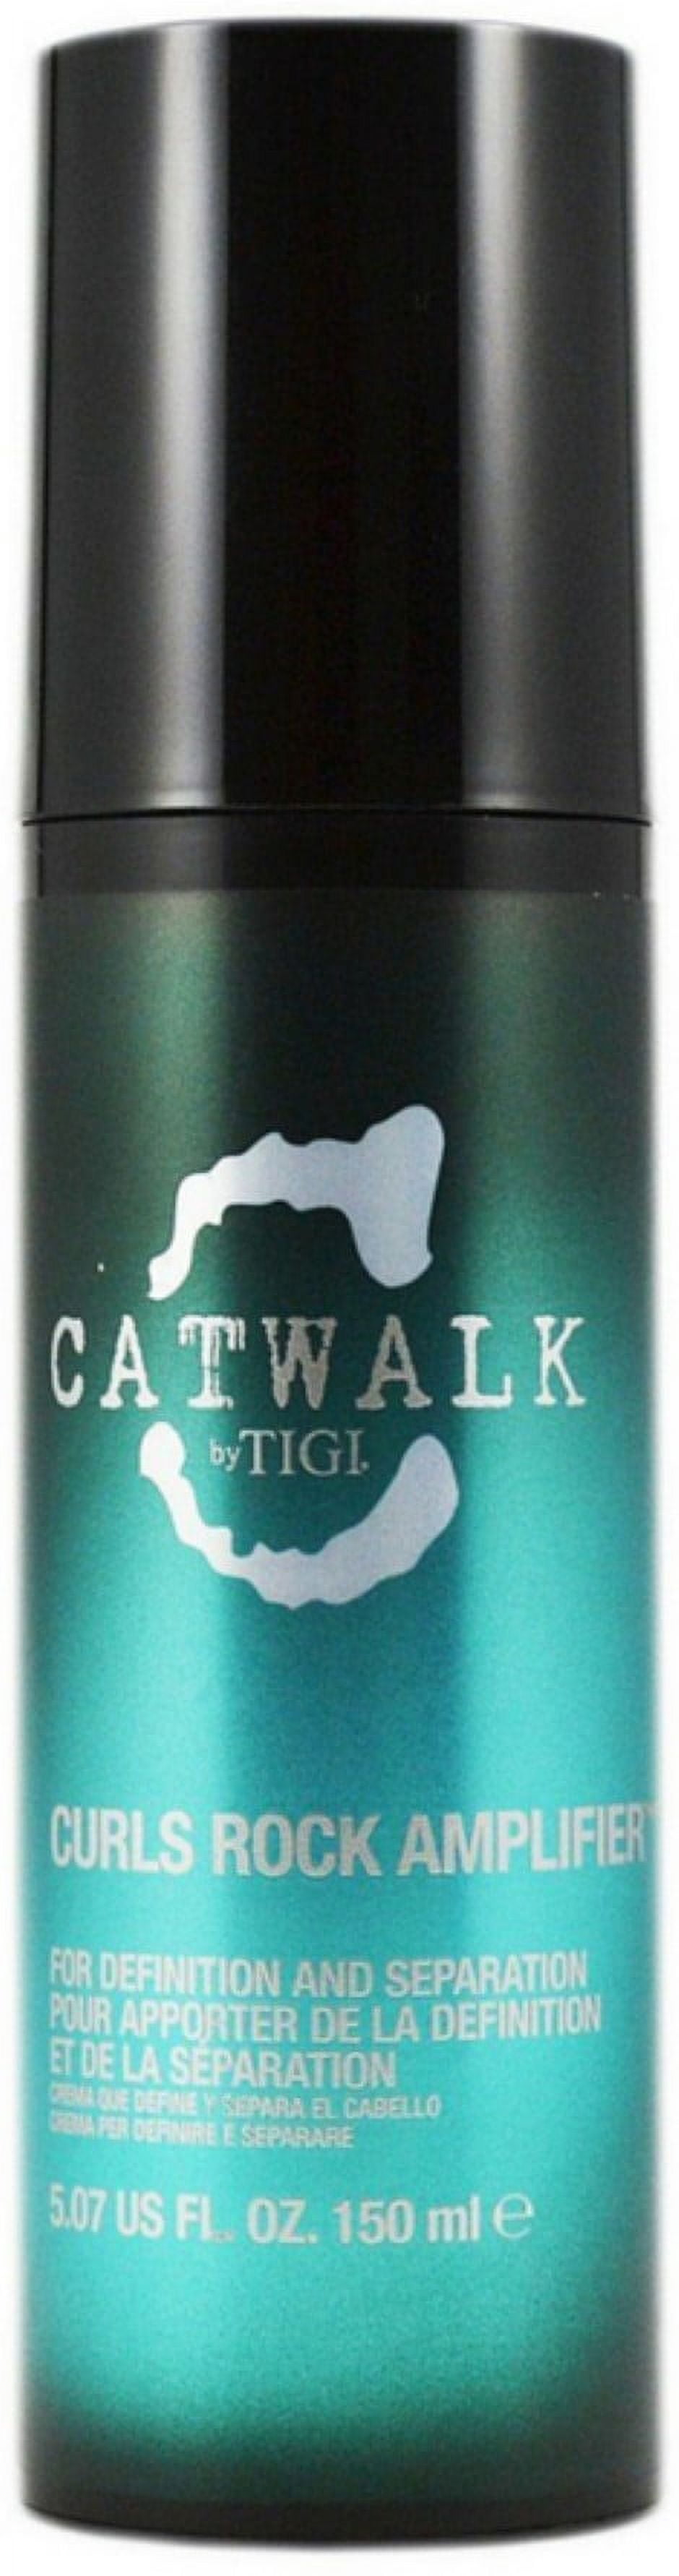 Tigi Catwalk Curls Rock Amplifier, 5.07 Ounce